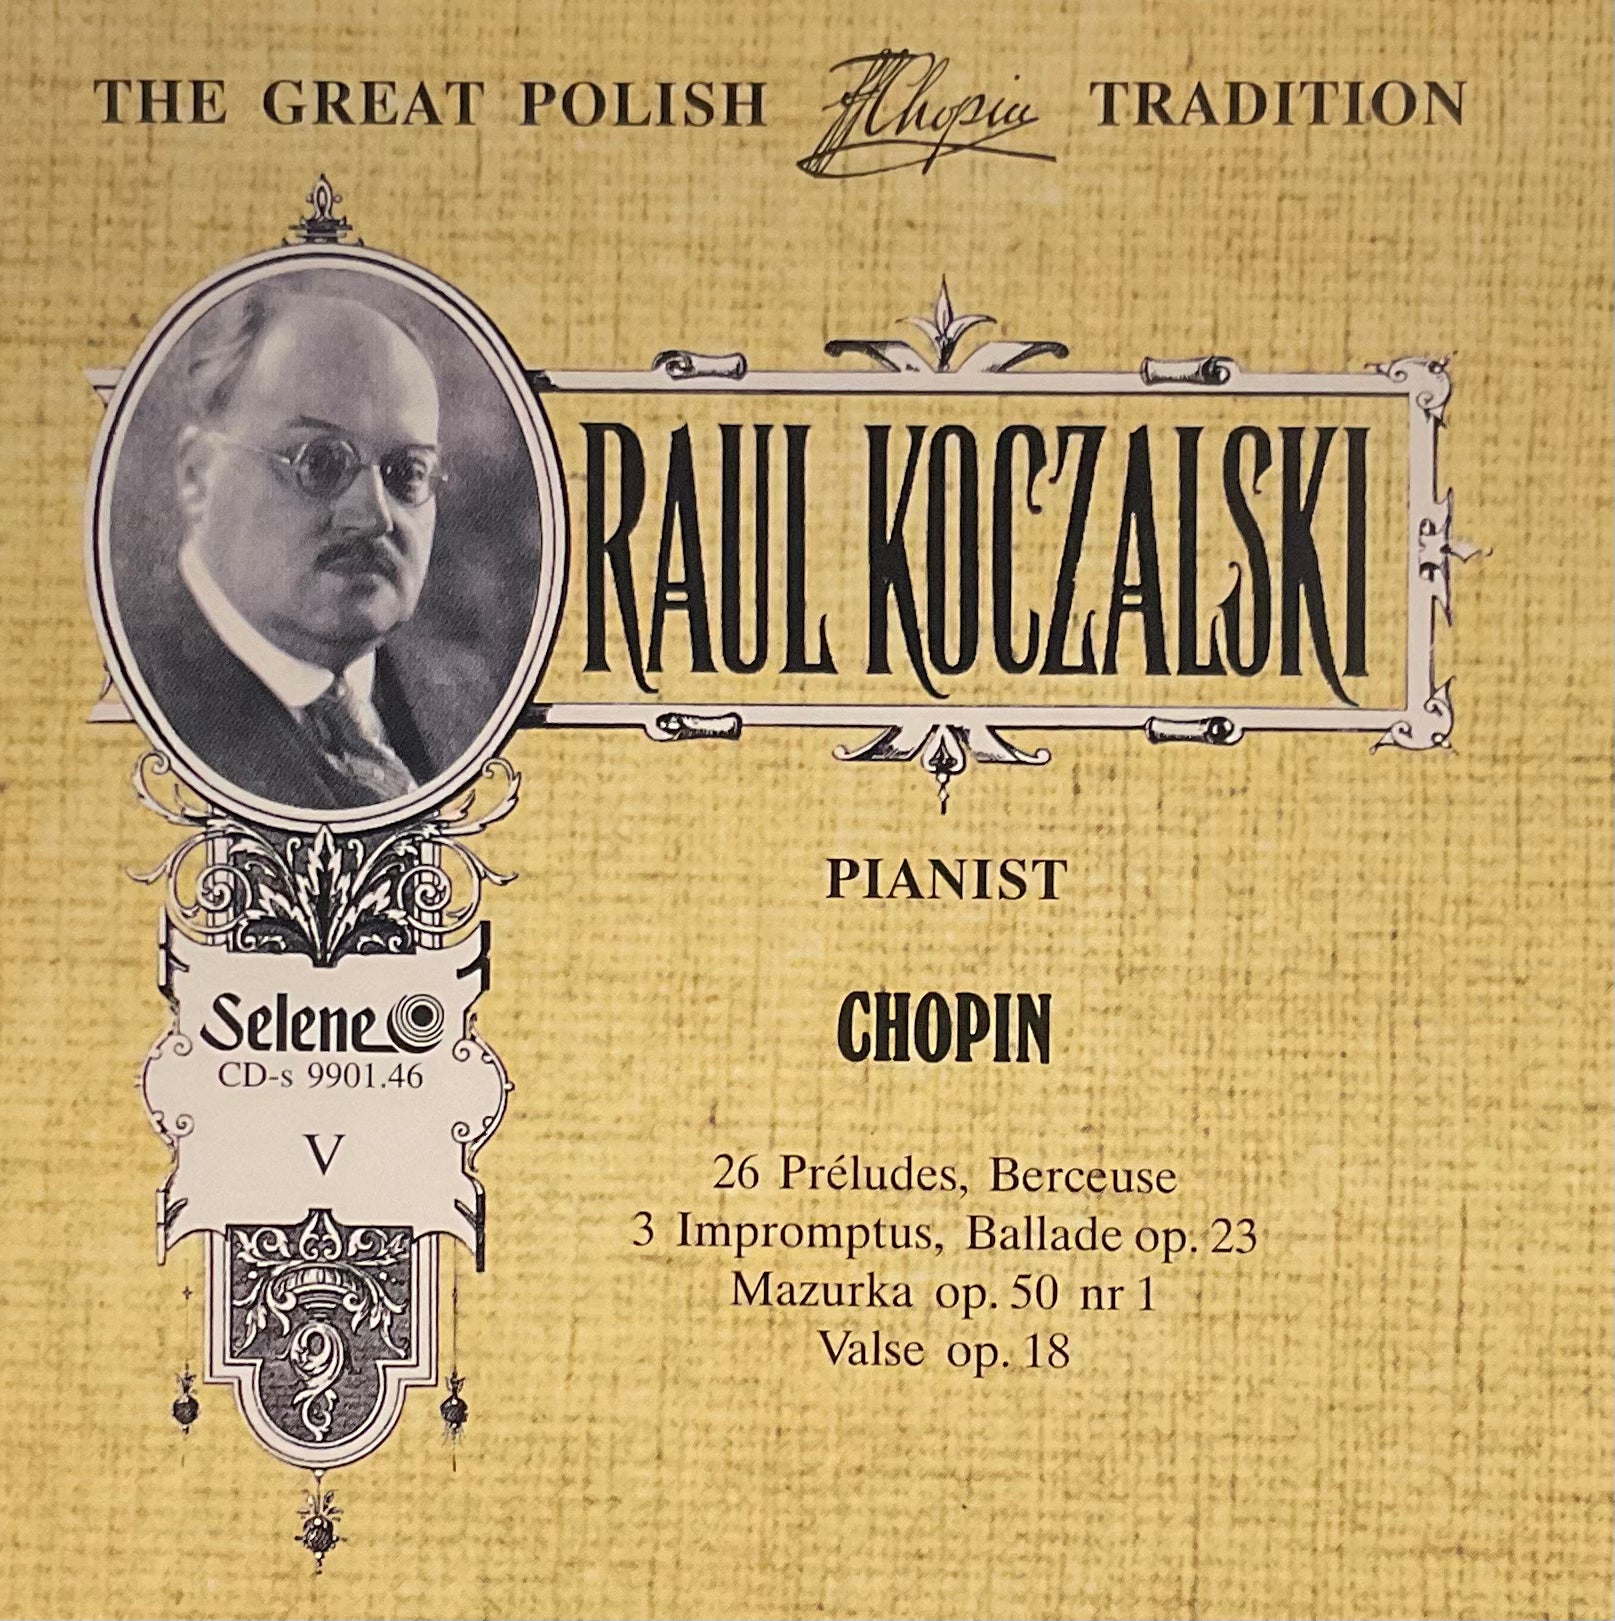 The Great Polish Chopin Tradition - Raul Koczalski vol V